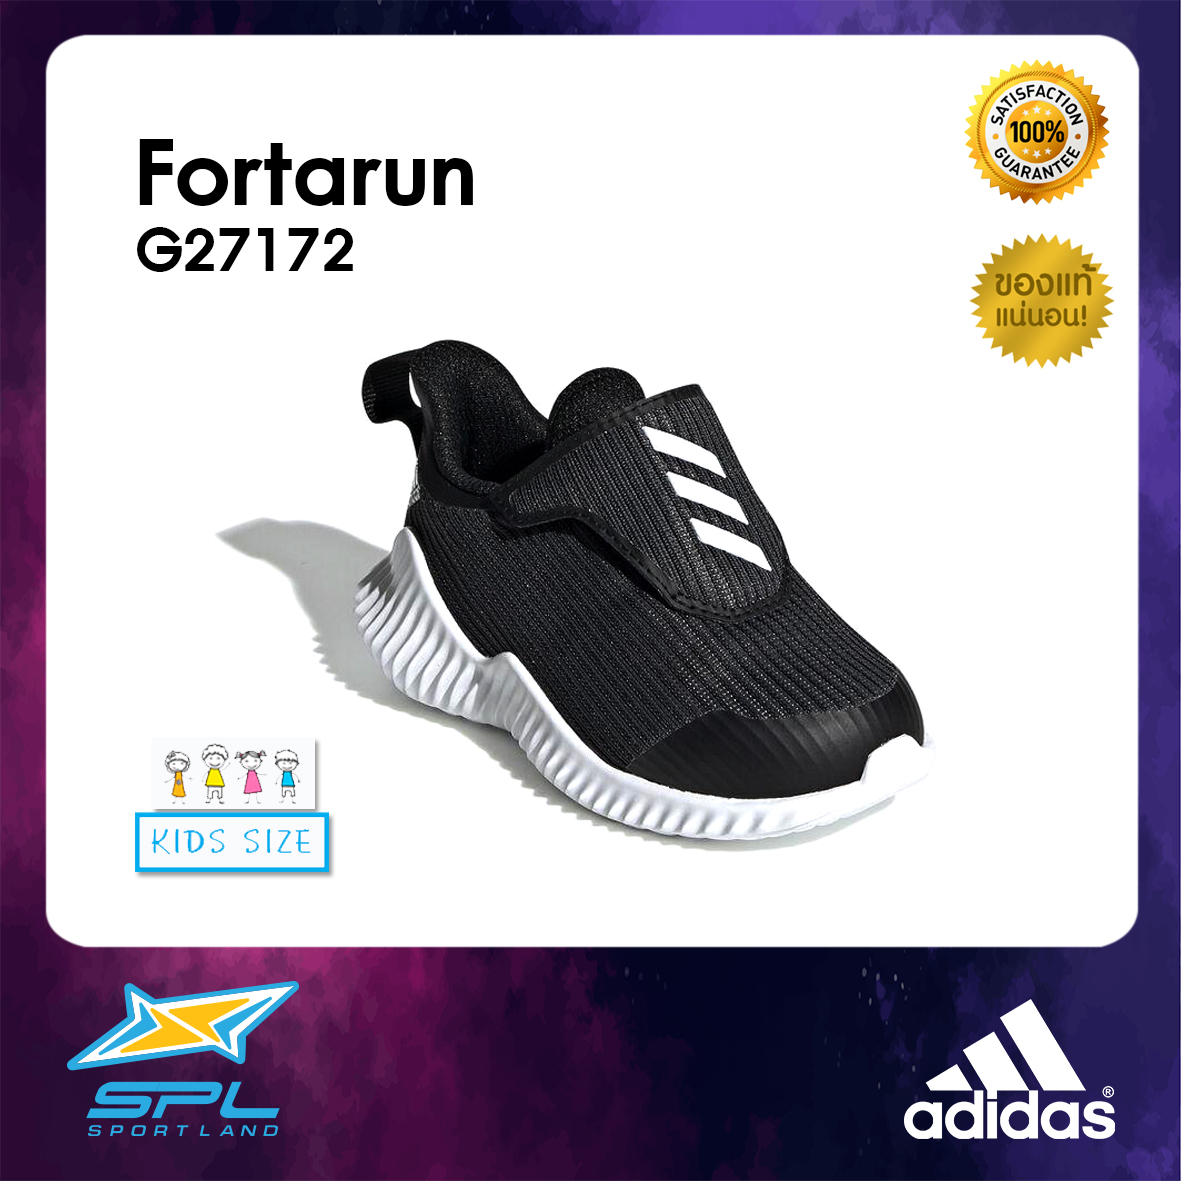 Adidas รองเท้าวิ่ง อาดิดาส Running Infant Shoe Fortarun AC G27172 (1200)